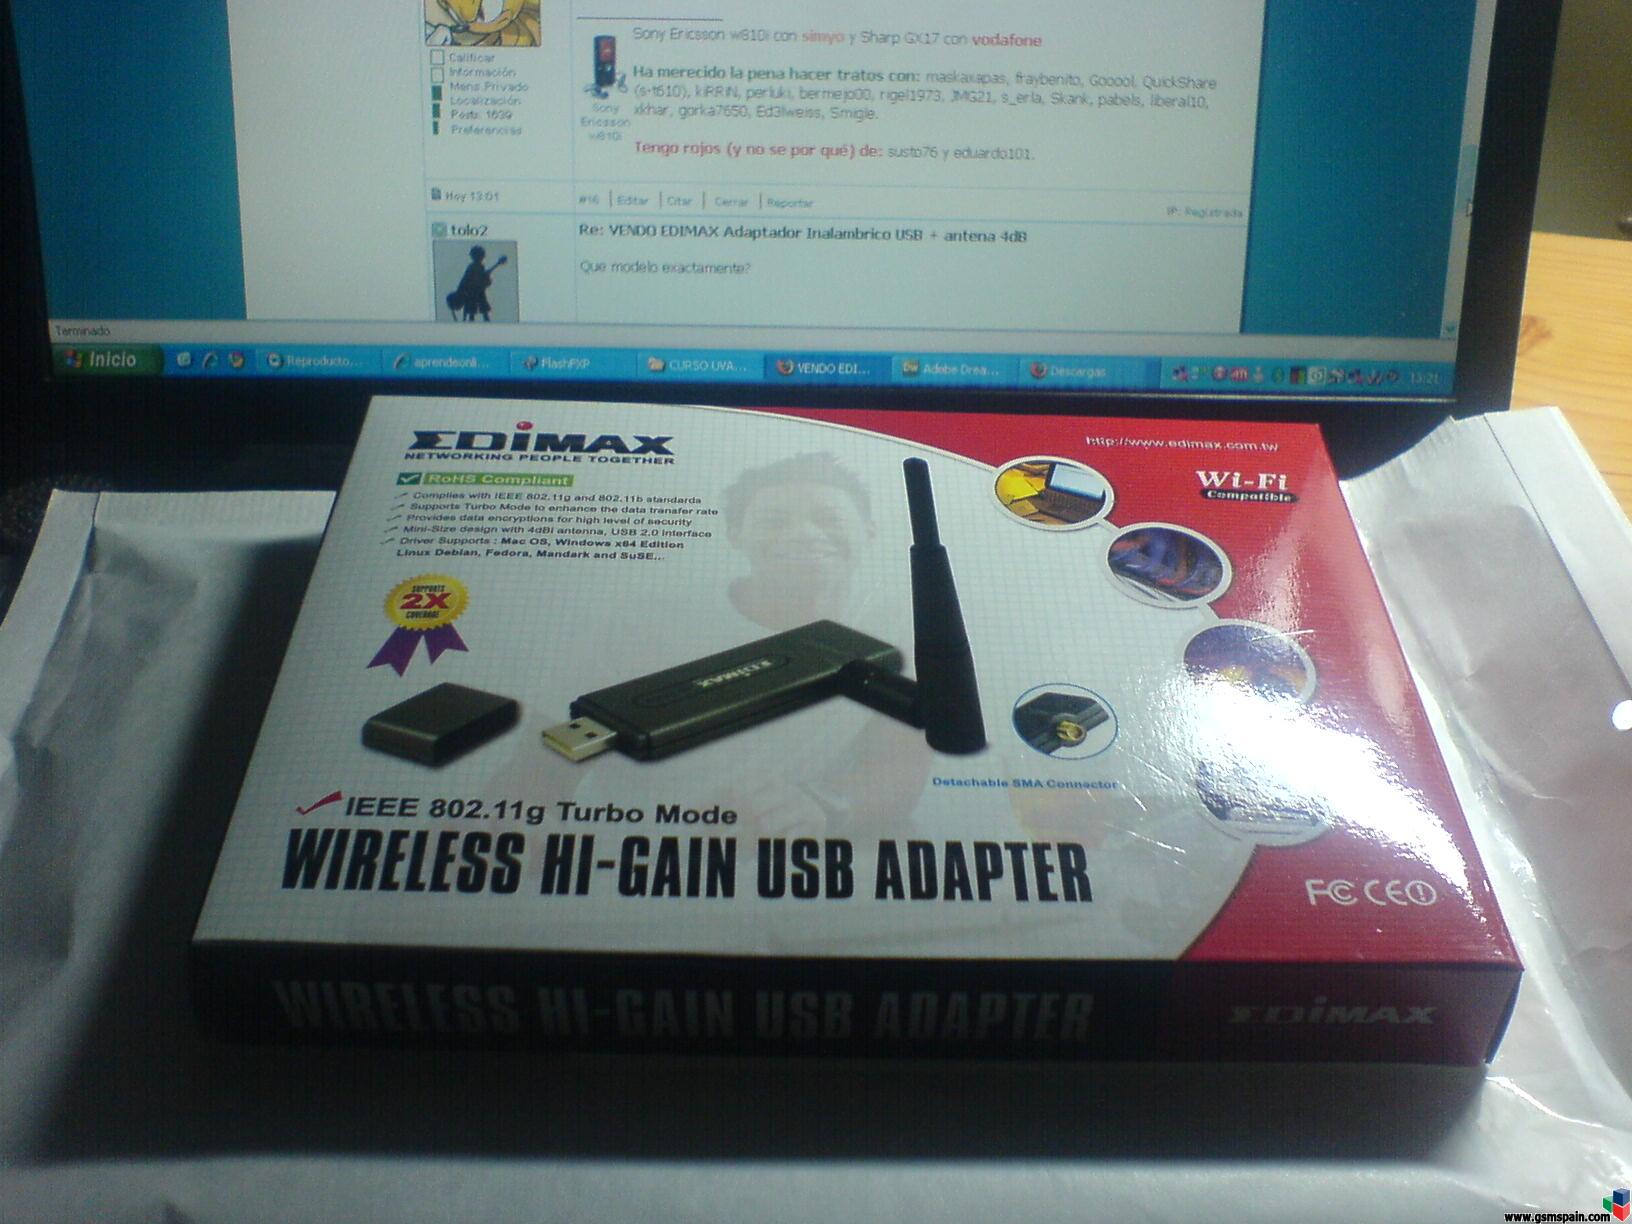 VENDO EDIMAX Adaptador Inalambrico USB + antena 4dB